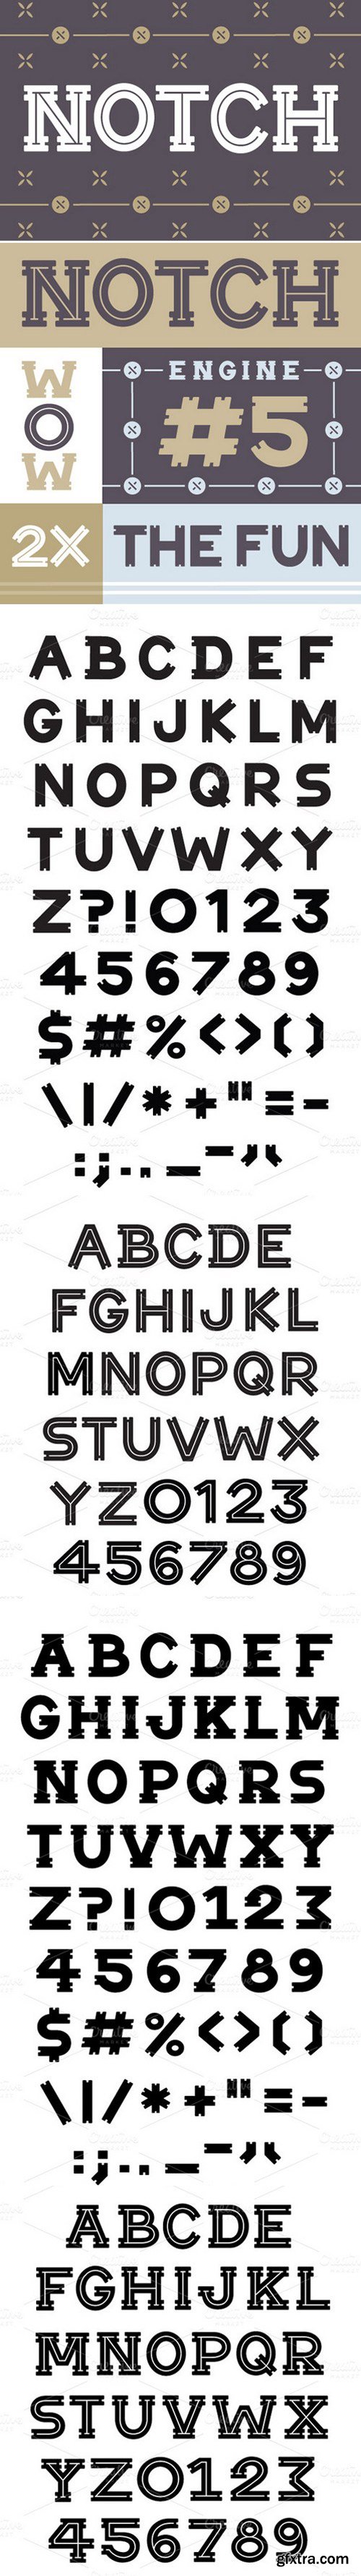 CM - Notch Slab Serif Fonts